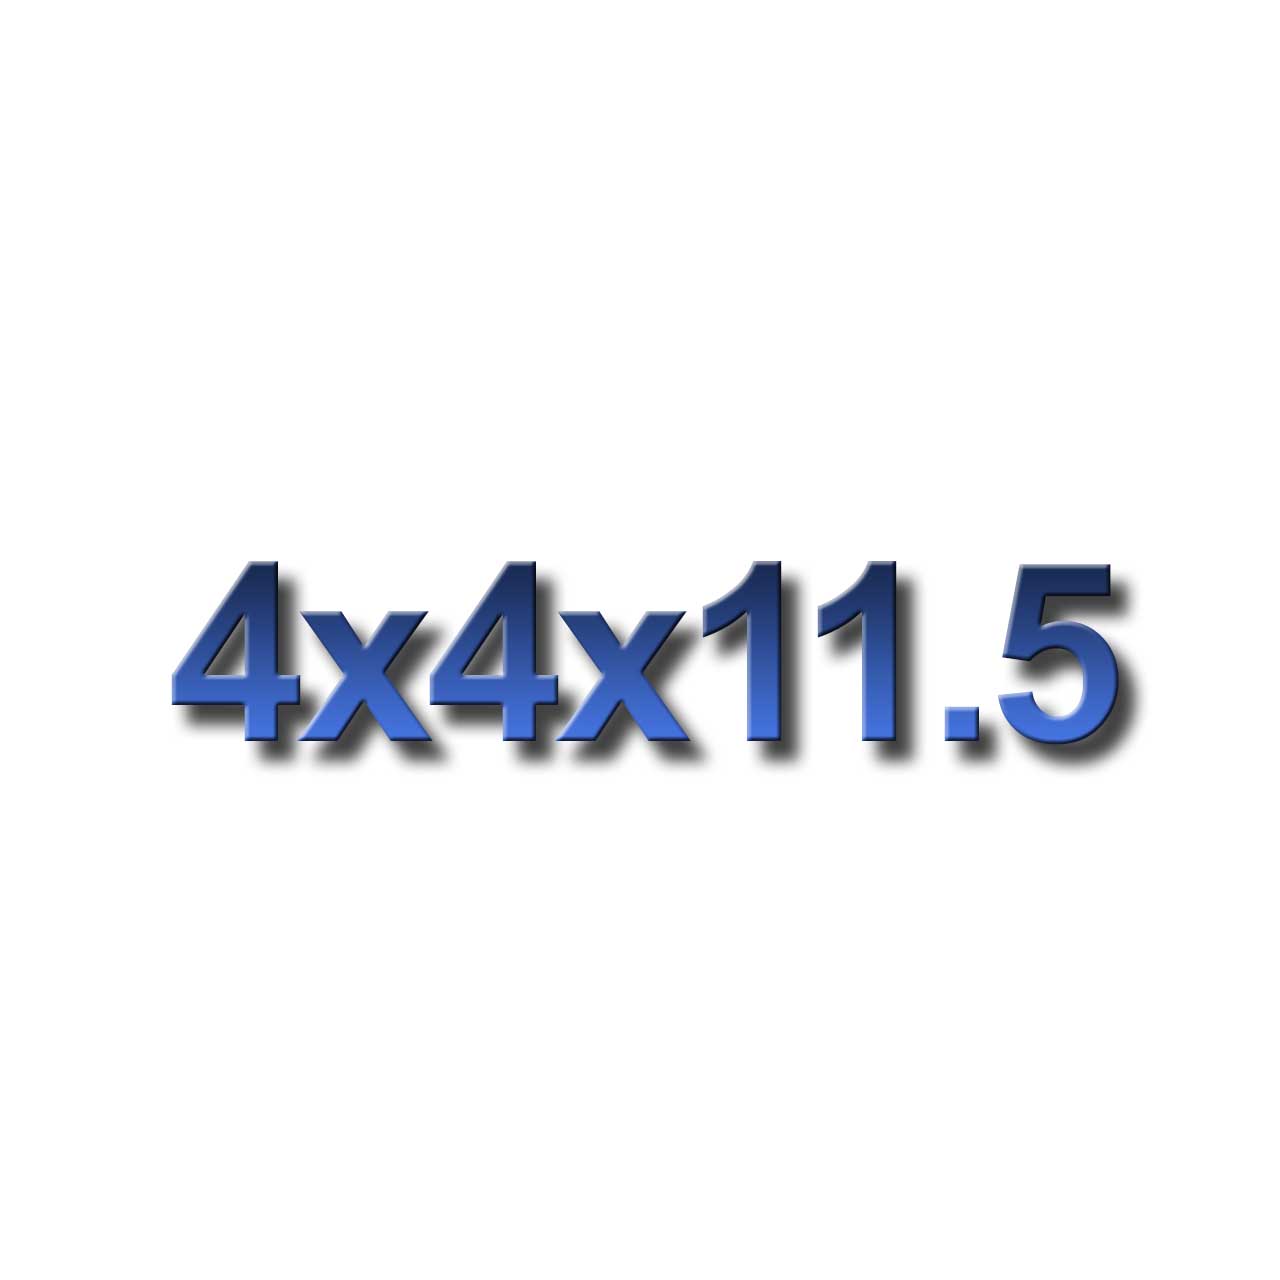 4x4x11.5